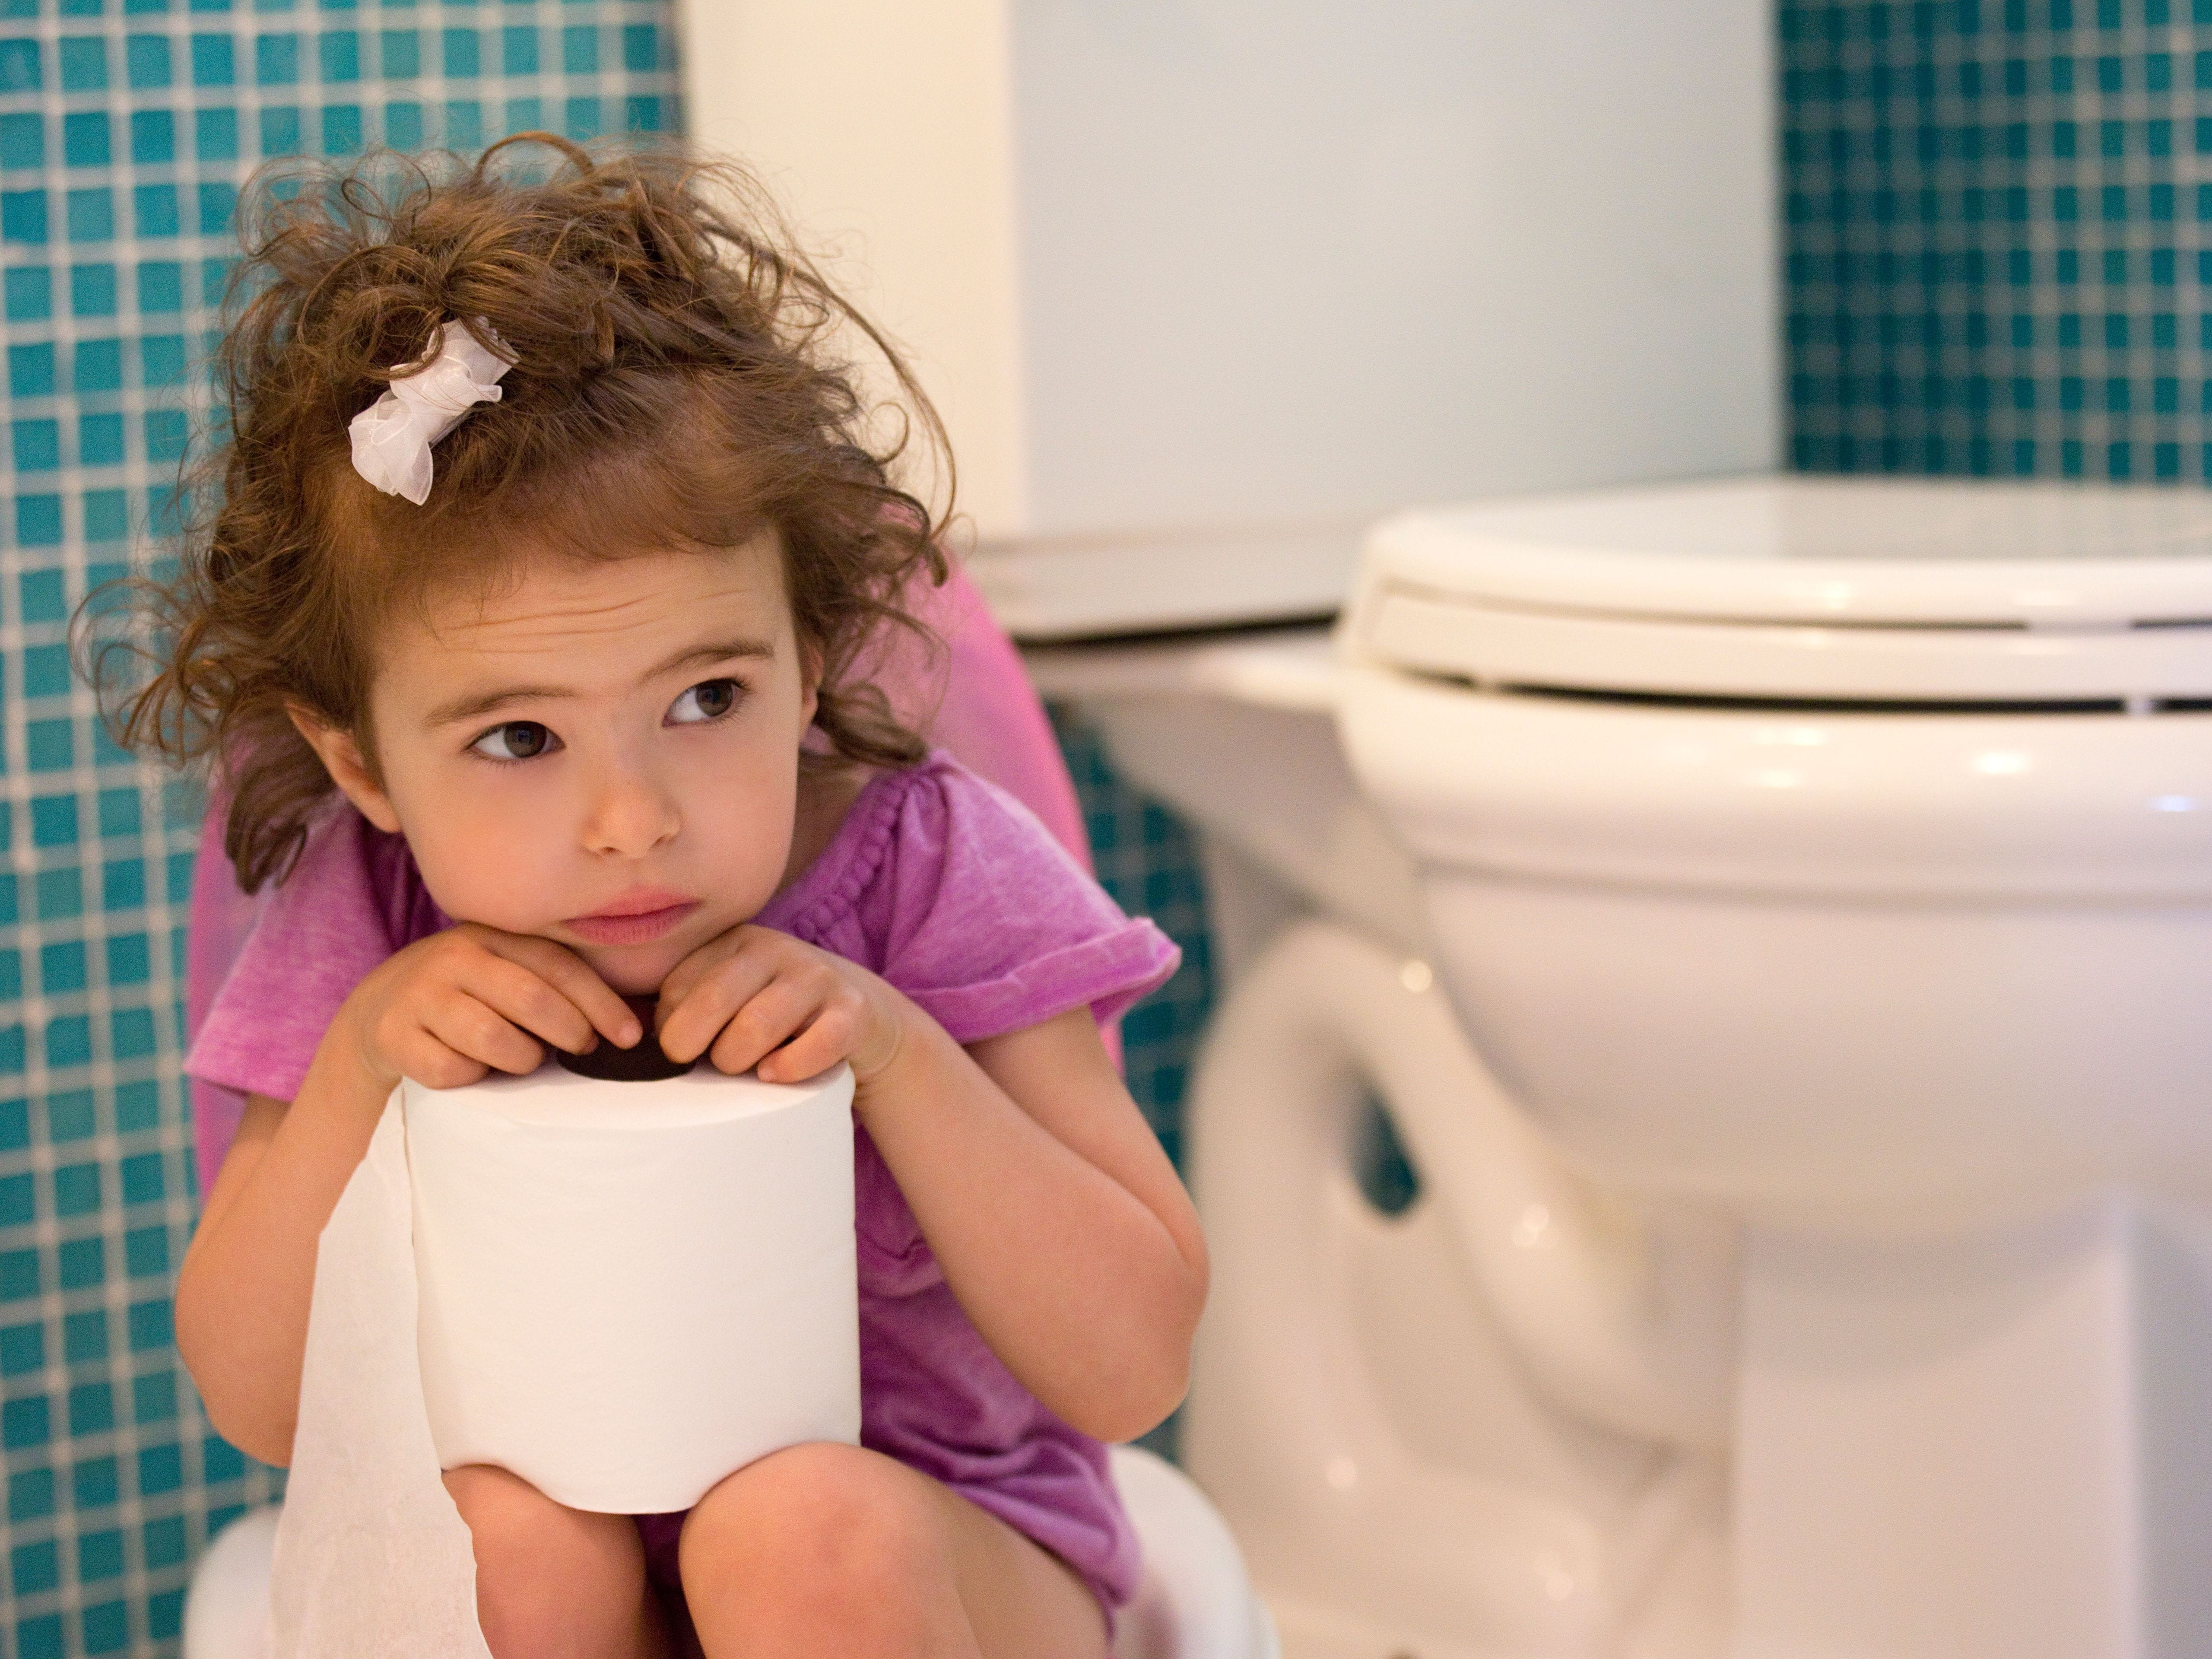 girl clutching toilet paper